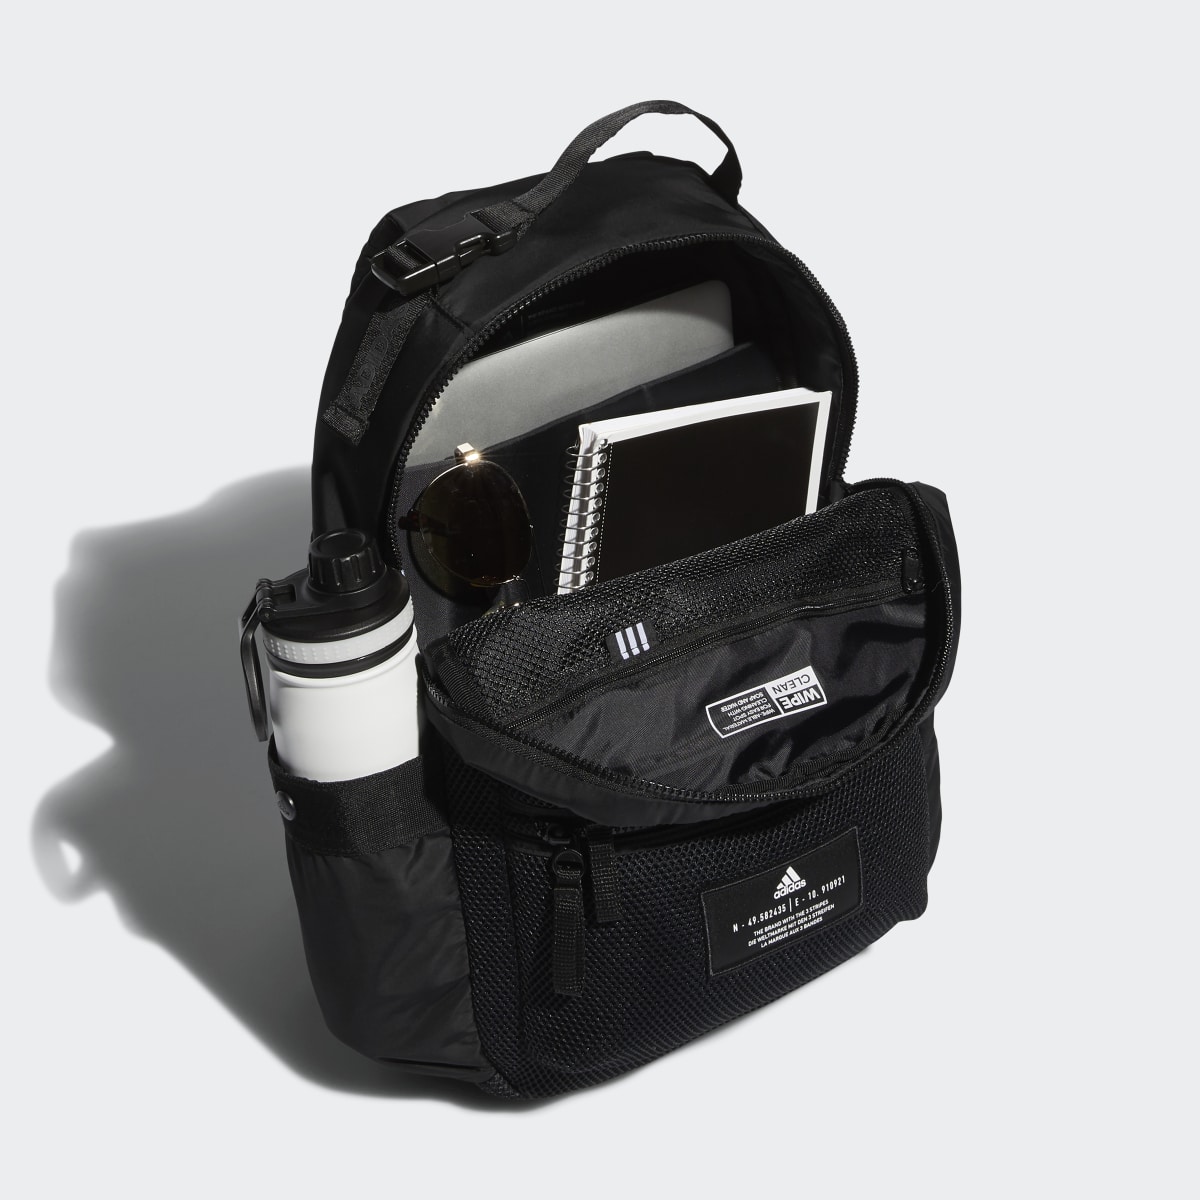 Adidas VFA Backpack. 5